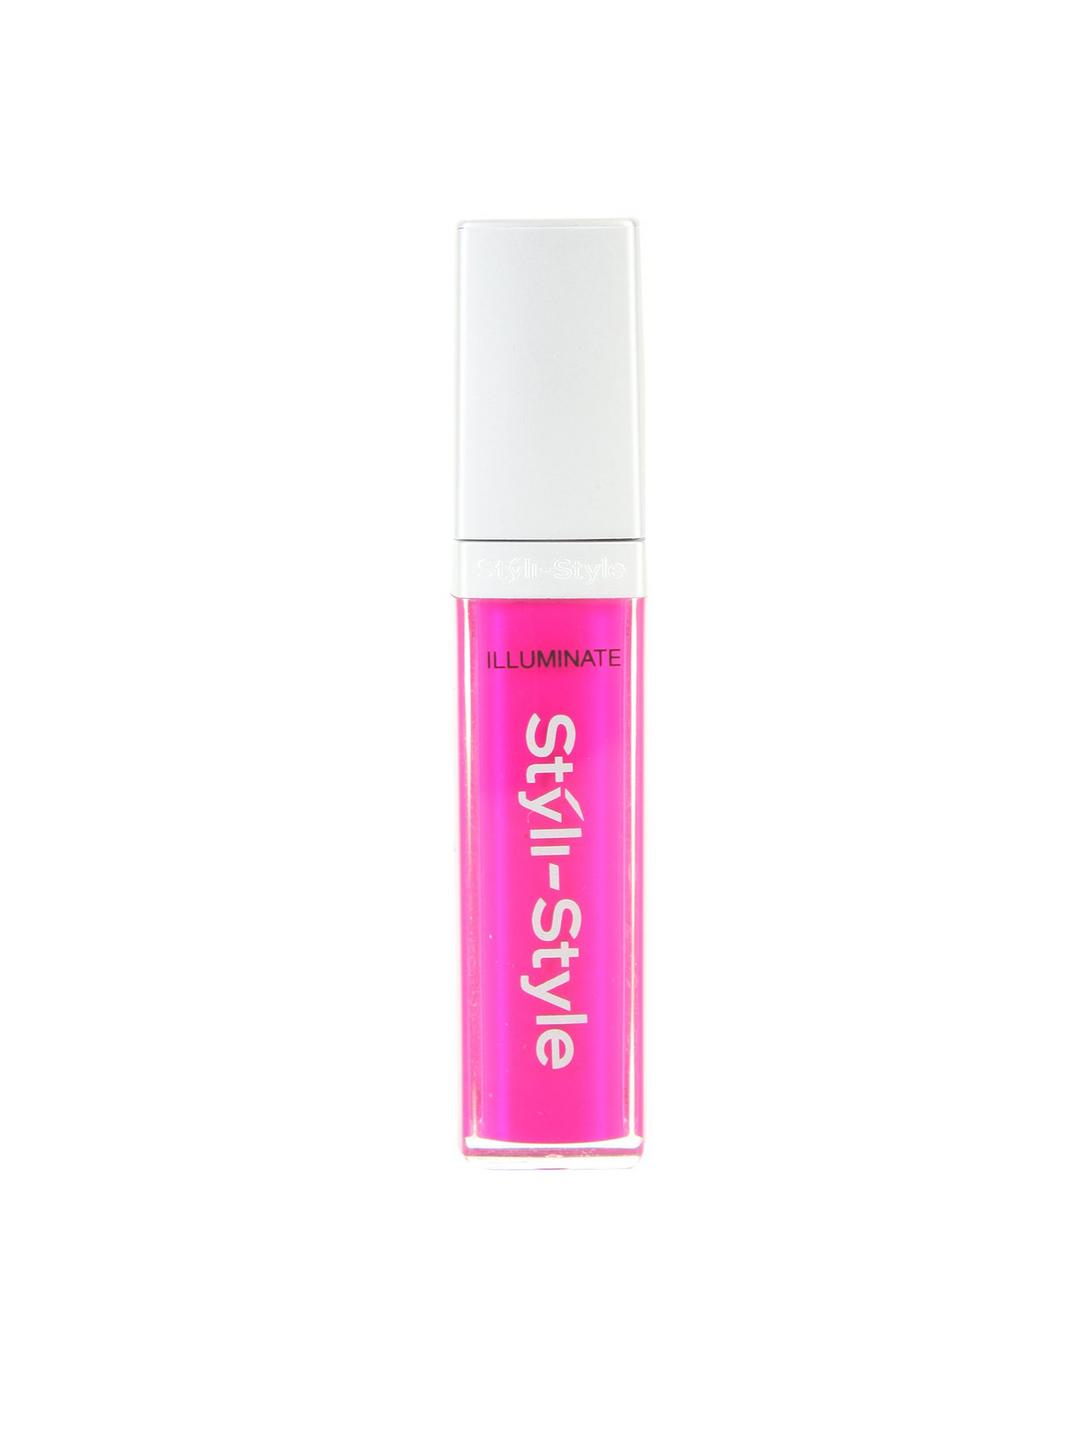 Styli-Style Plastique Intense Neon Fuchsia Lip Gloss, , hi-res